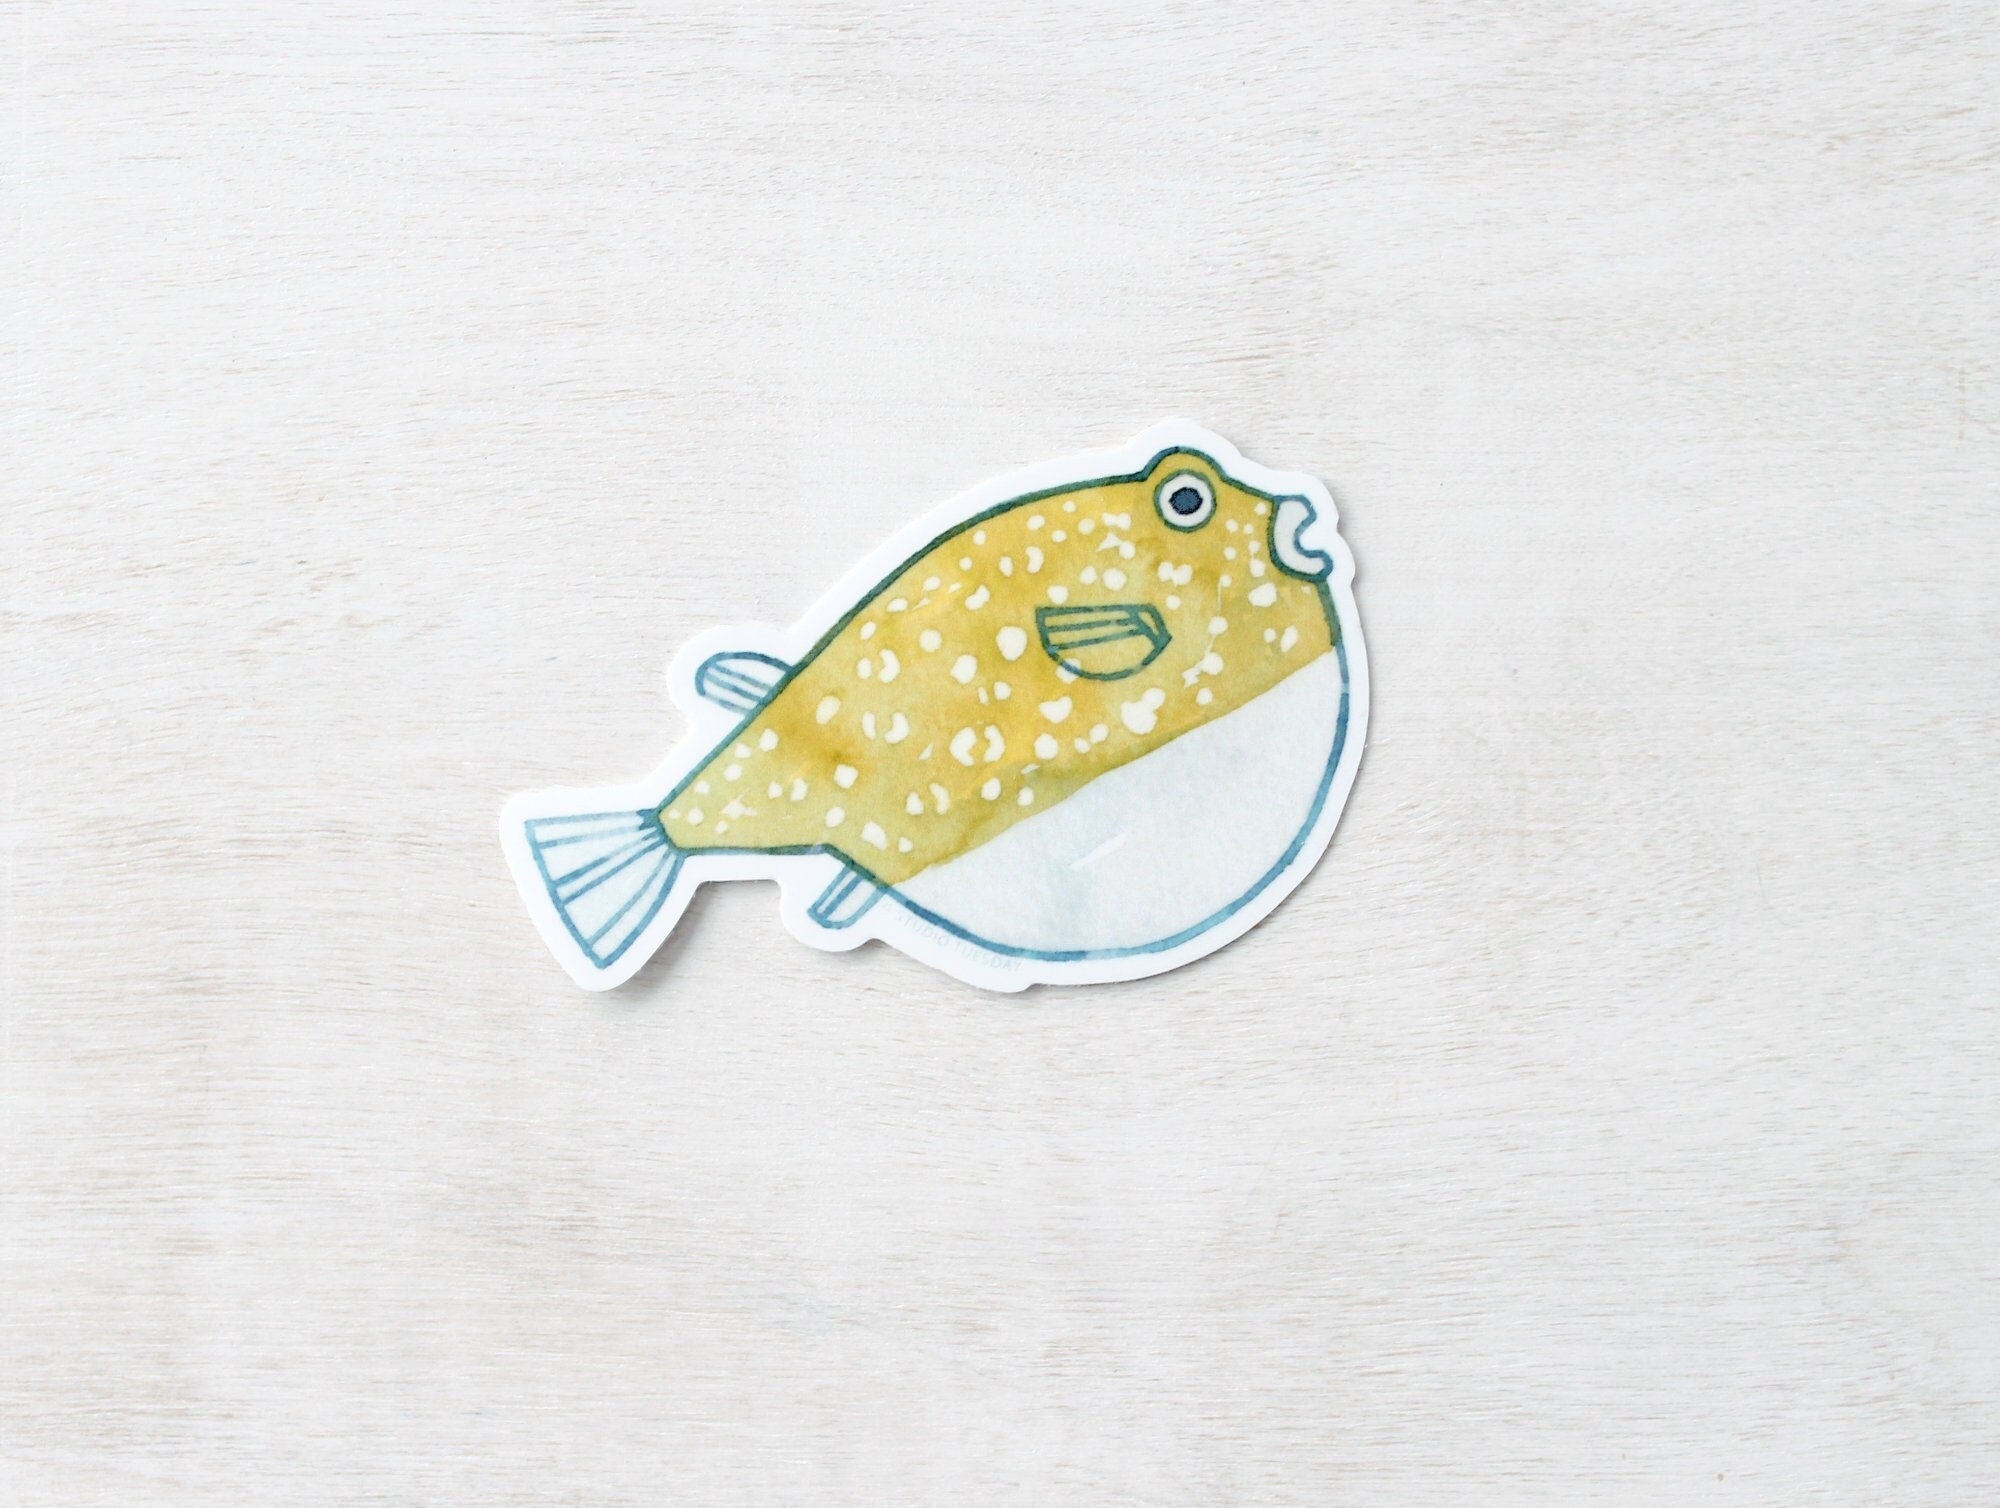 Pufferfish Sticker, Ocean Animal Laptop Sticker, Waterproof Vinyl Art Sticker Decal